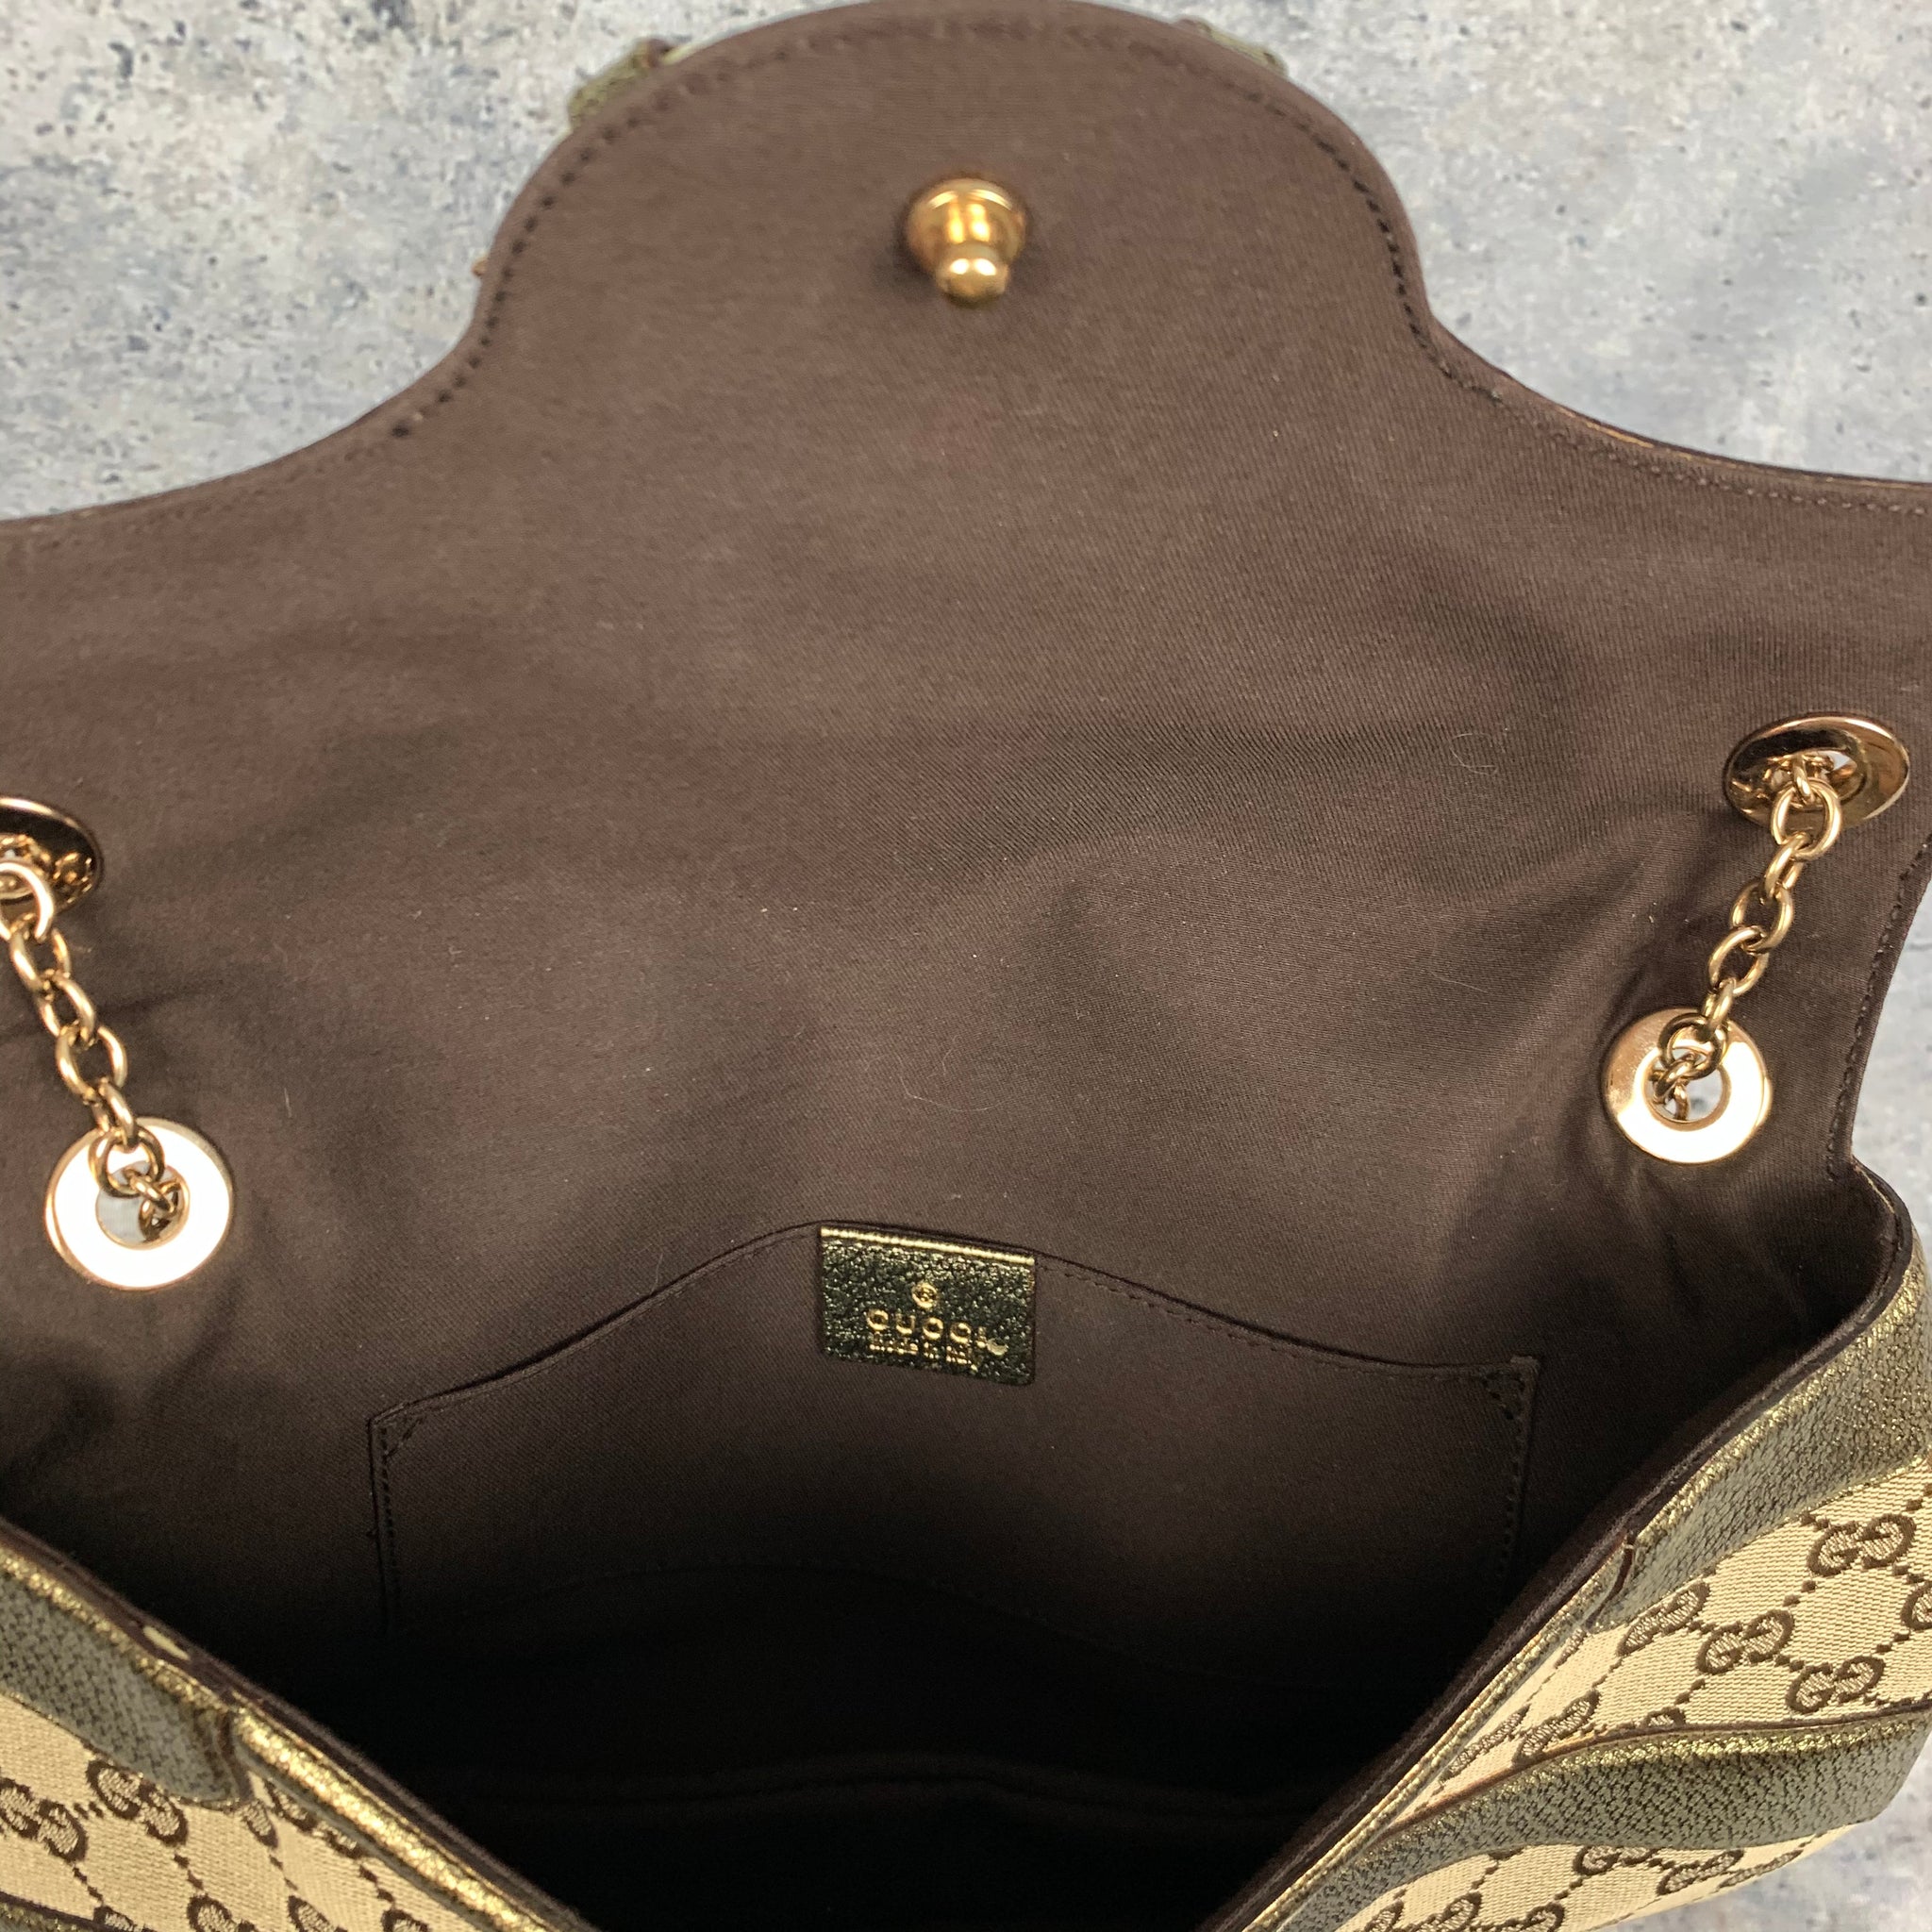 Gucci, Bags, Authentic Gucci Dragon Bag 204 Tom Ford Era